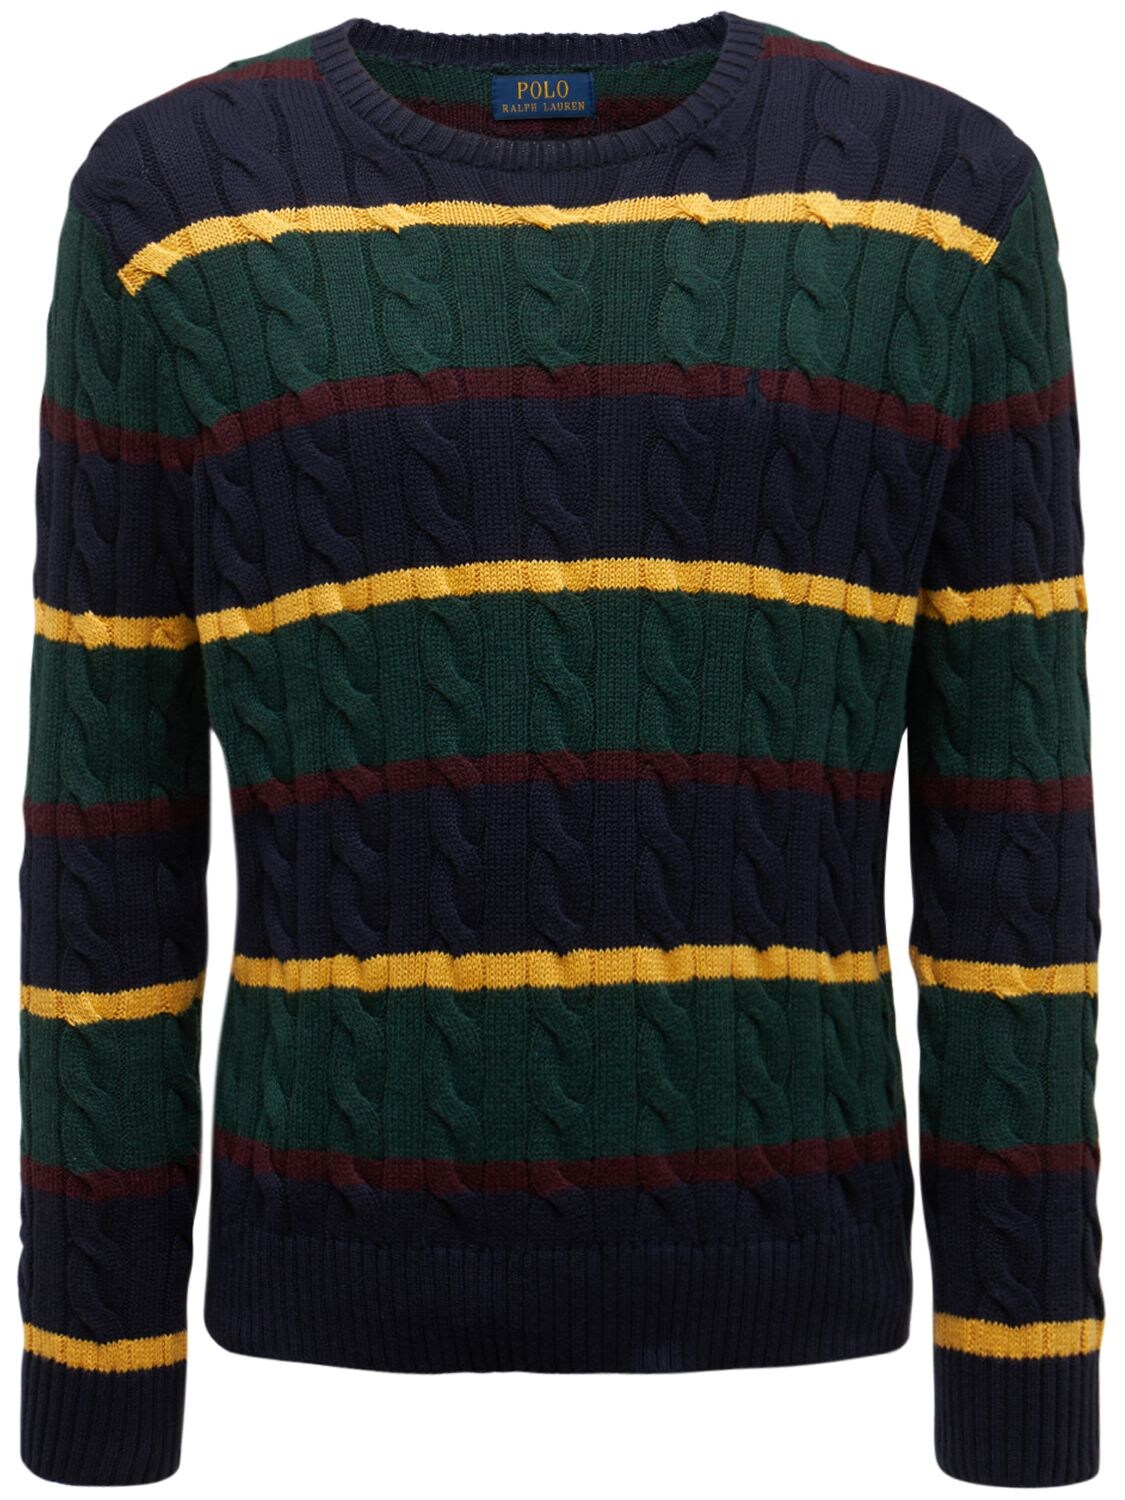 Cotton Stripe Cable Knit Regular Fit Crewneck Sweater In Navy Multi Stripe